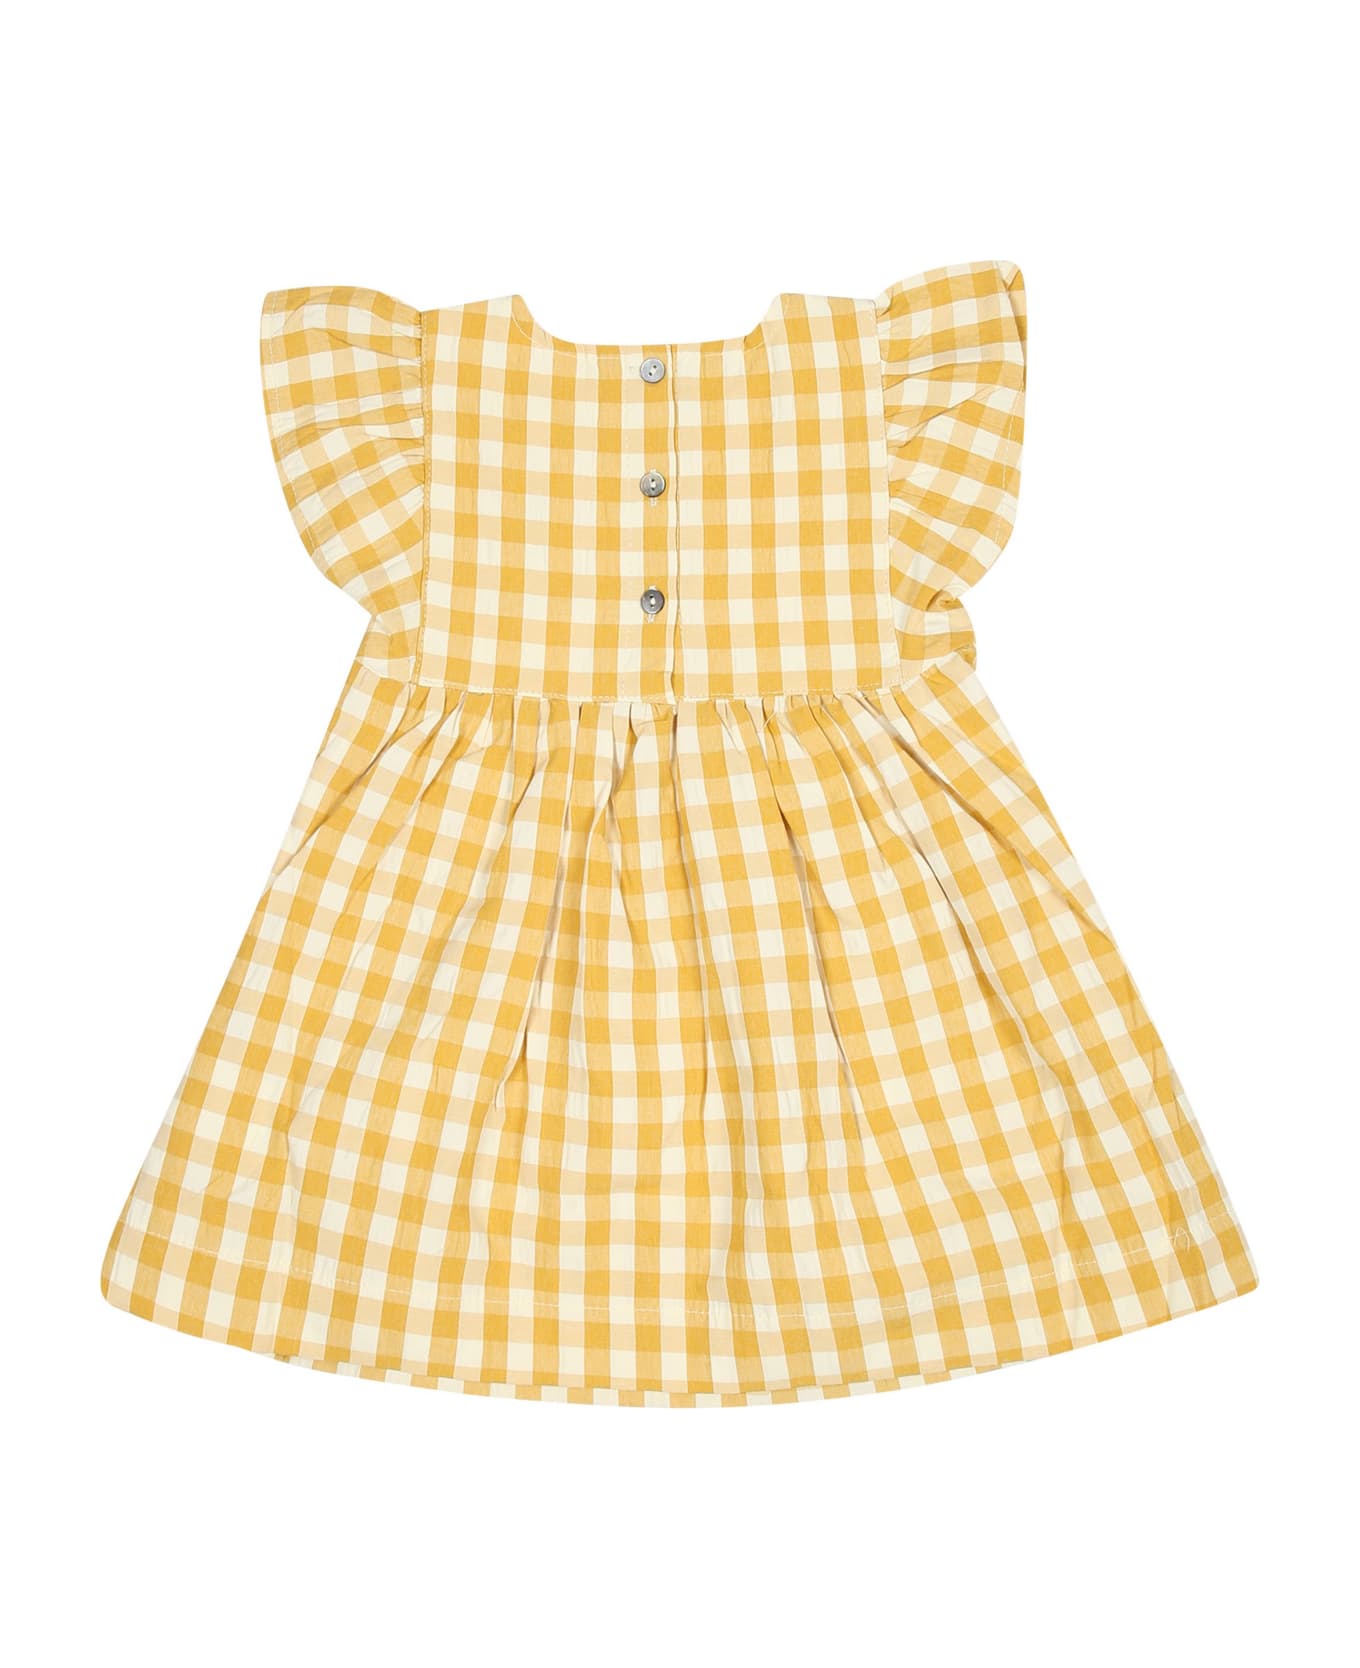 Molo Casual Yellow Dress Chantal For Baby Girl - Yellow